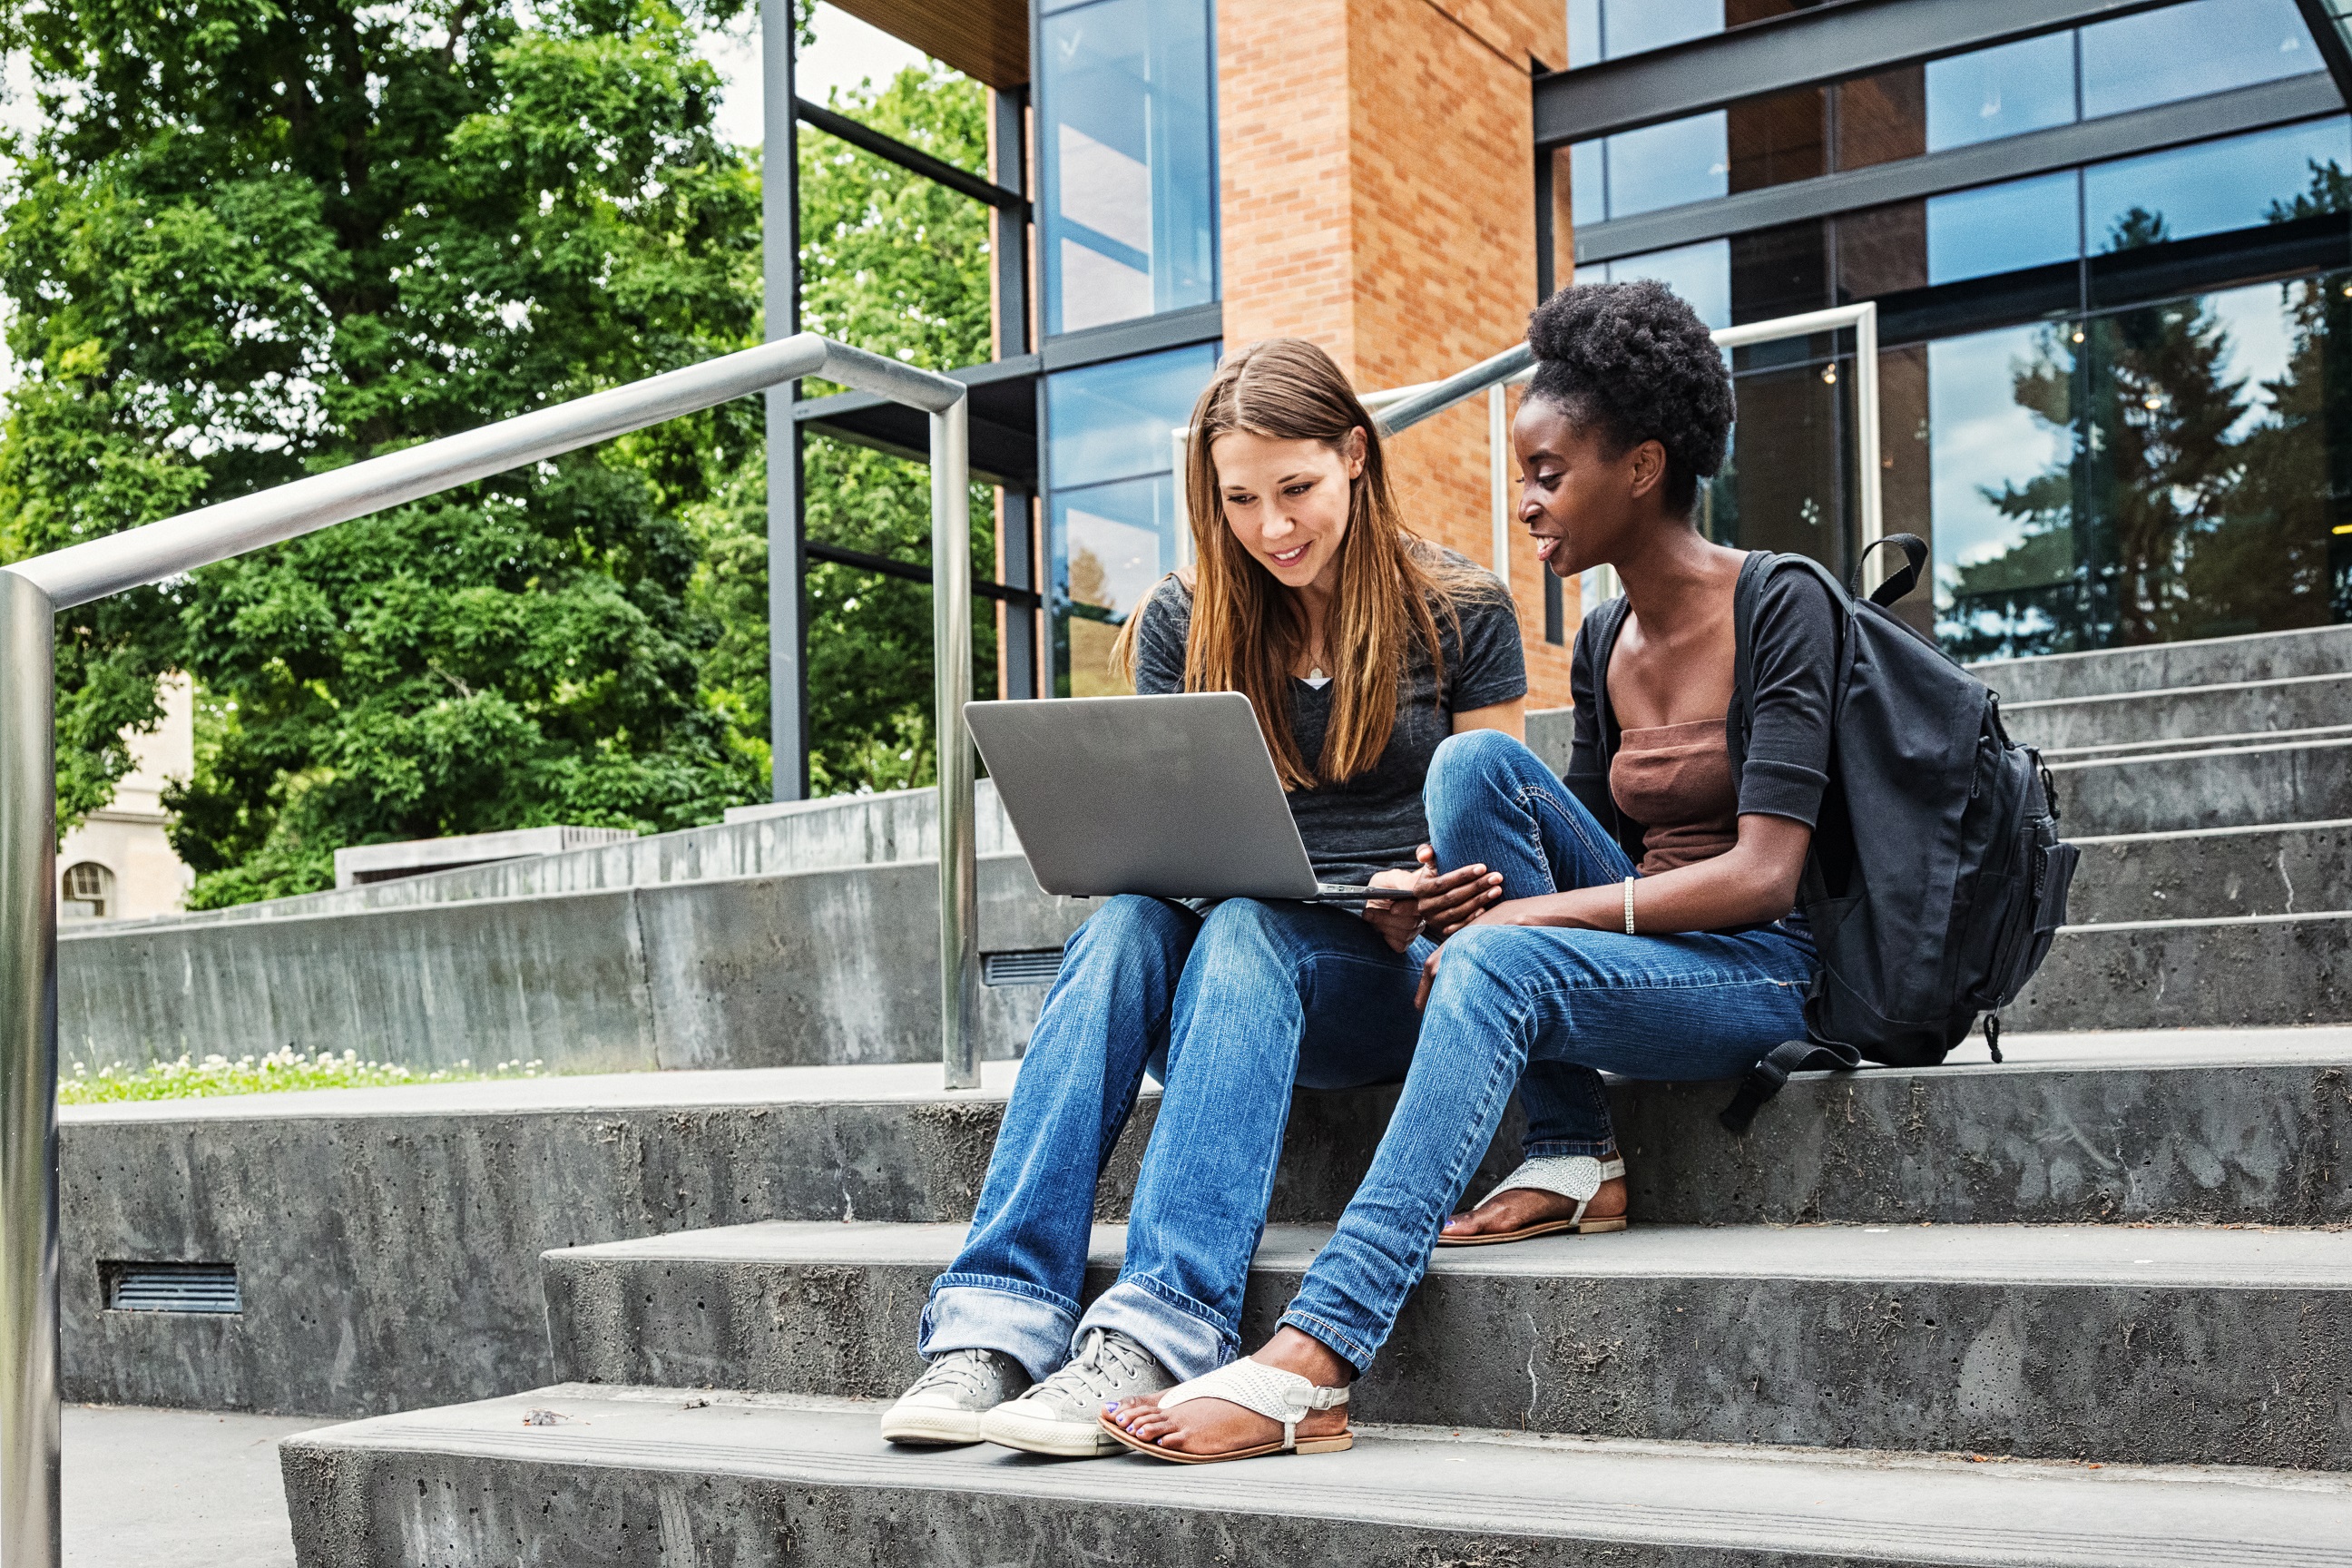 SAP Dual Study Program Fast-tracks Work Readiness for University Graduates